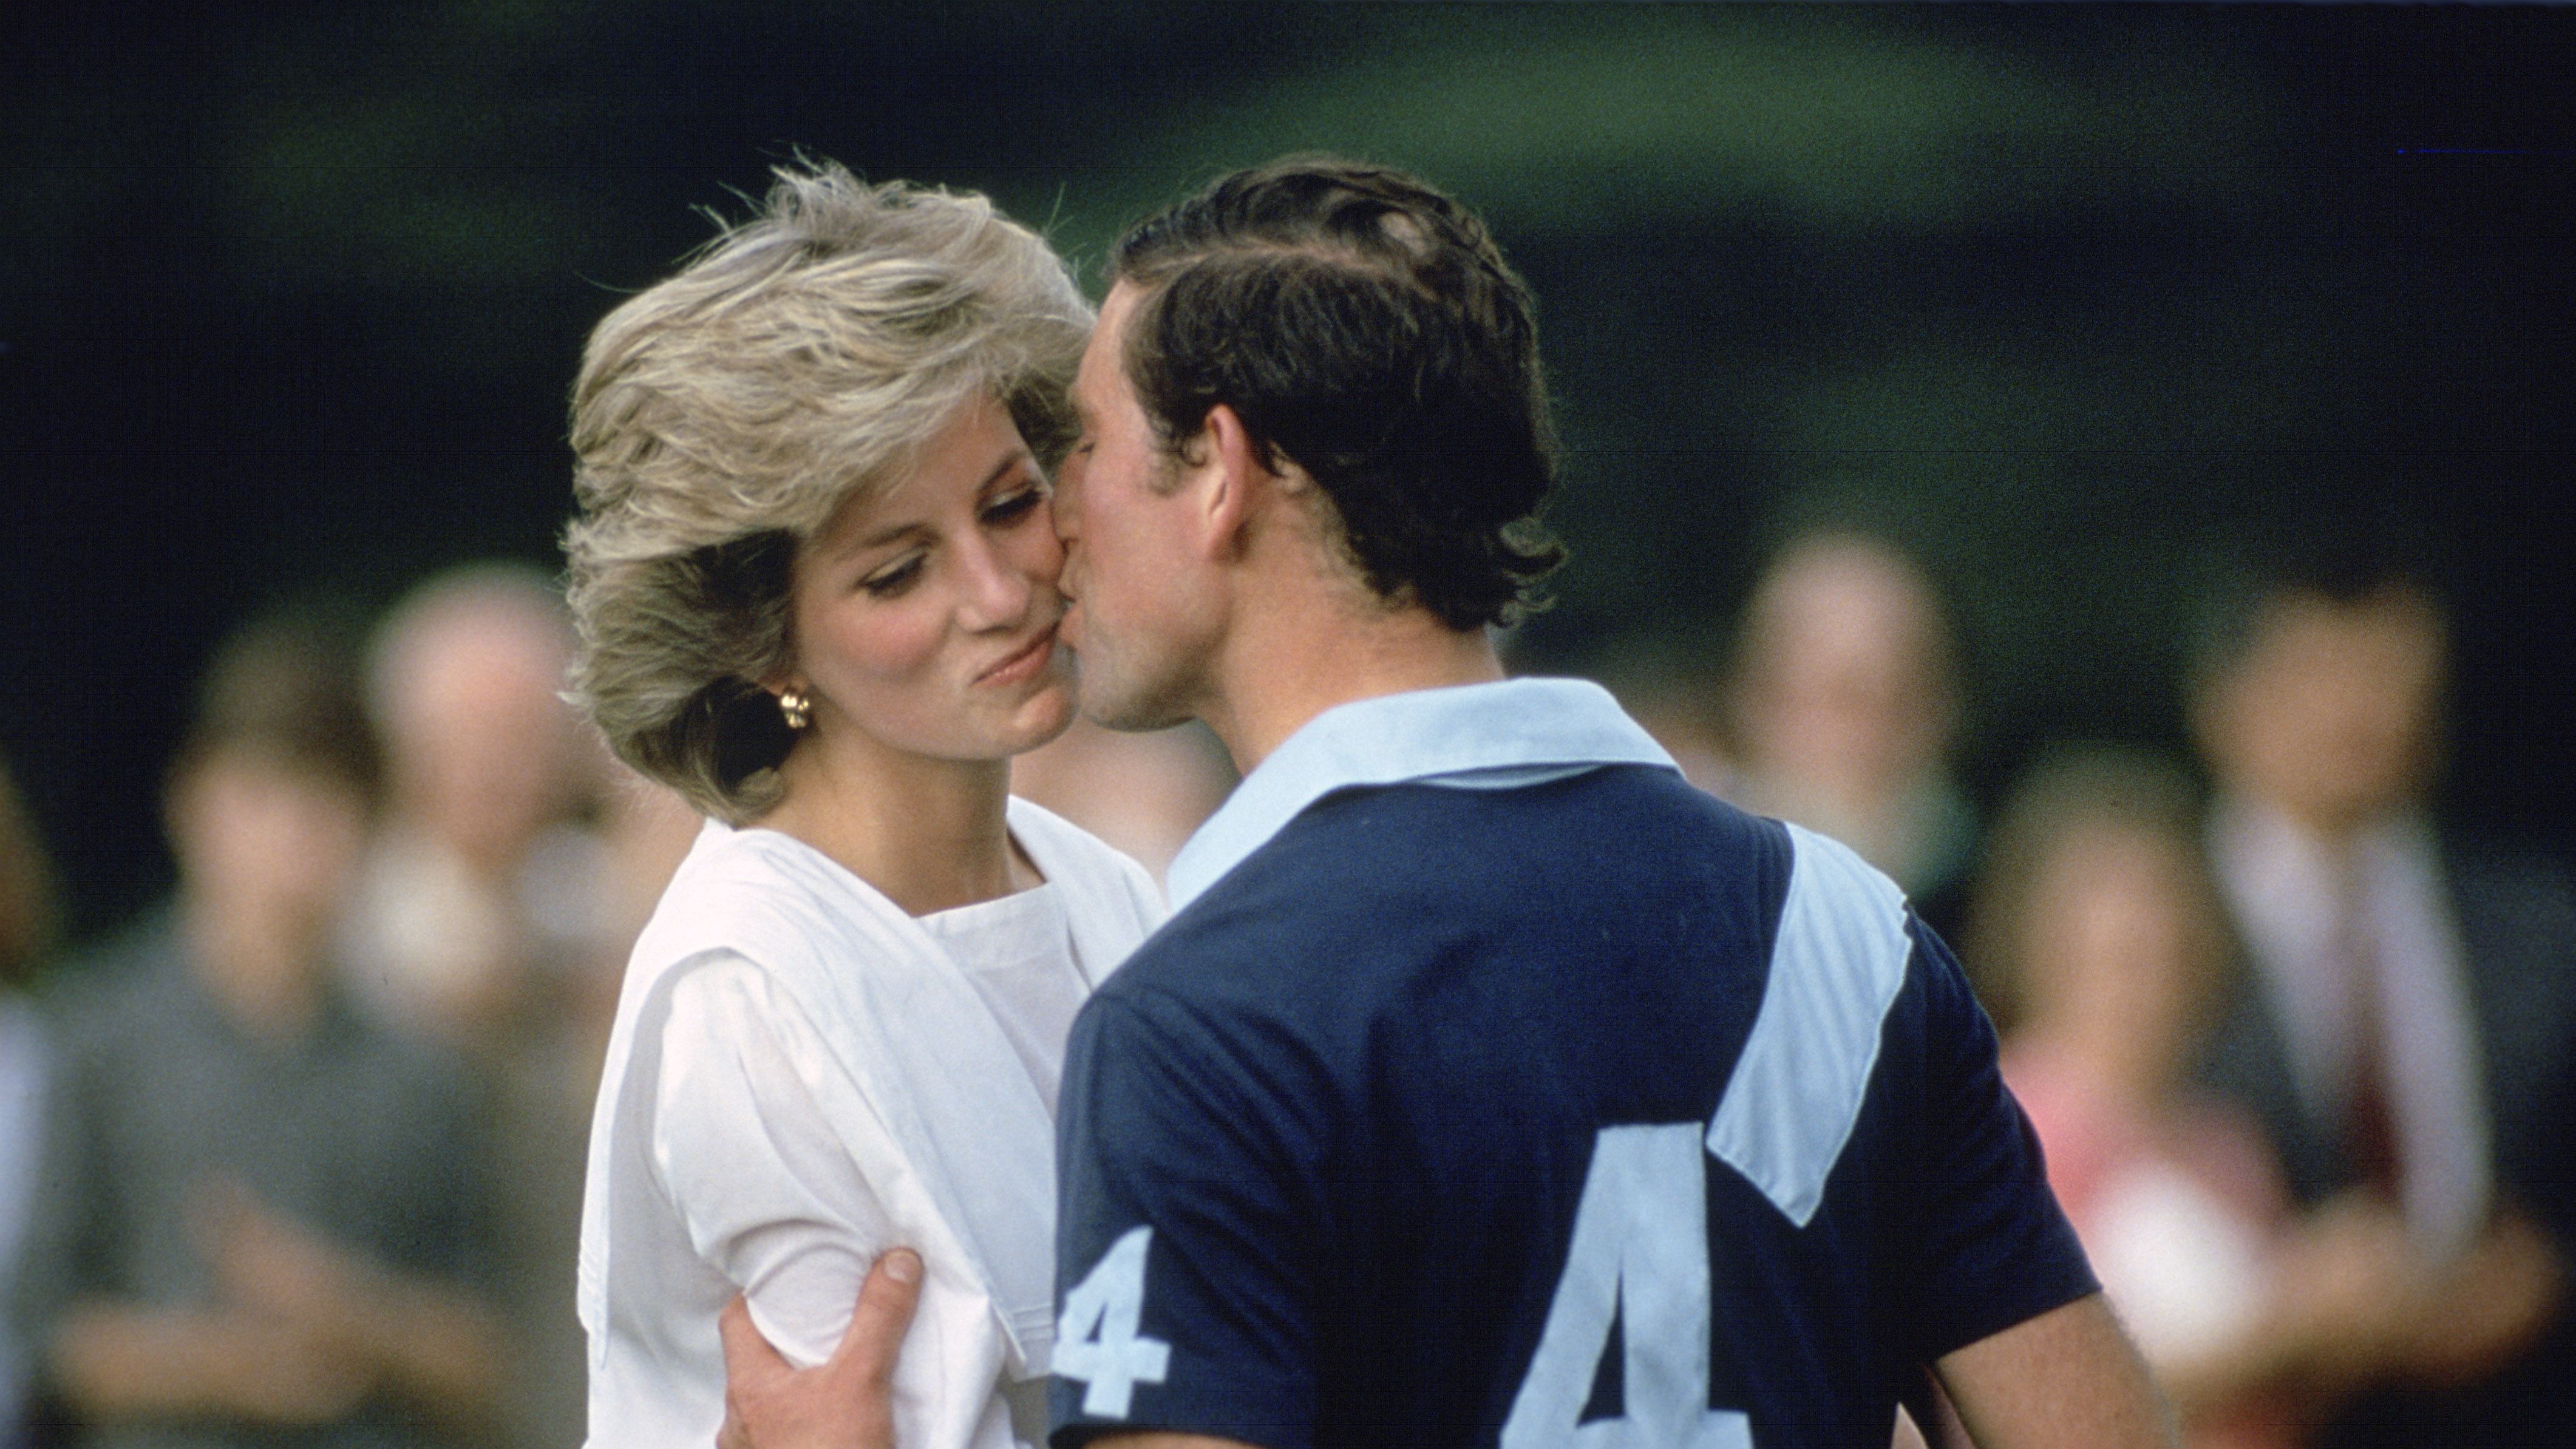 Brother Sister Kissing Sleeping Sex - Prince Charles and Princess Diana The Crown Season 4 Relationship Timeline